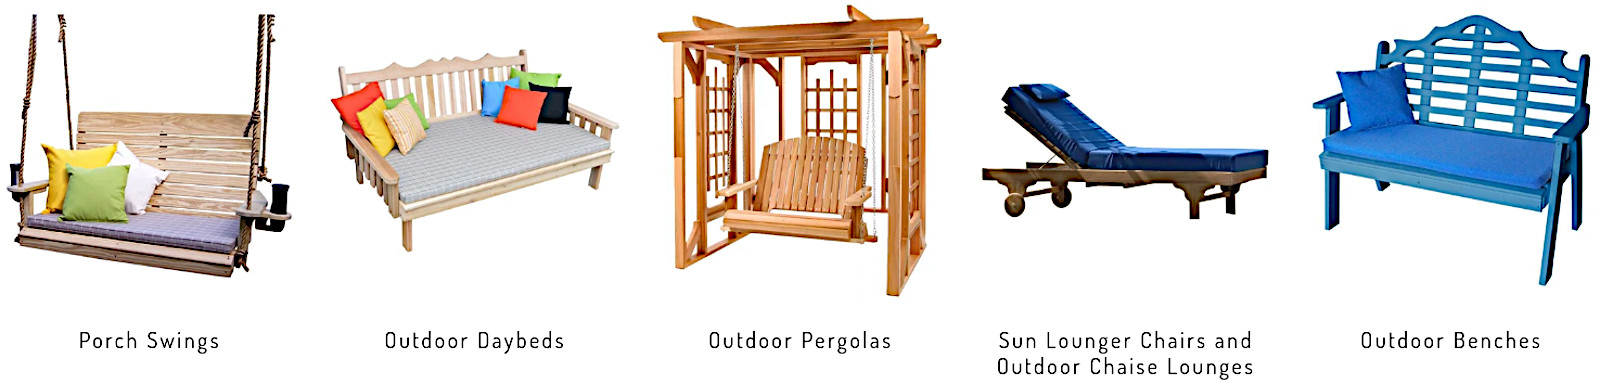 outdoor furniture inexpensive